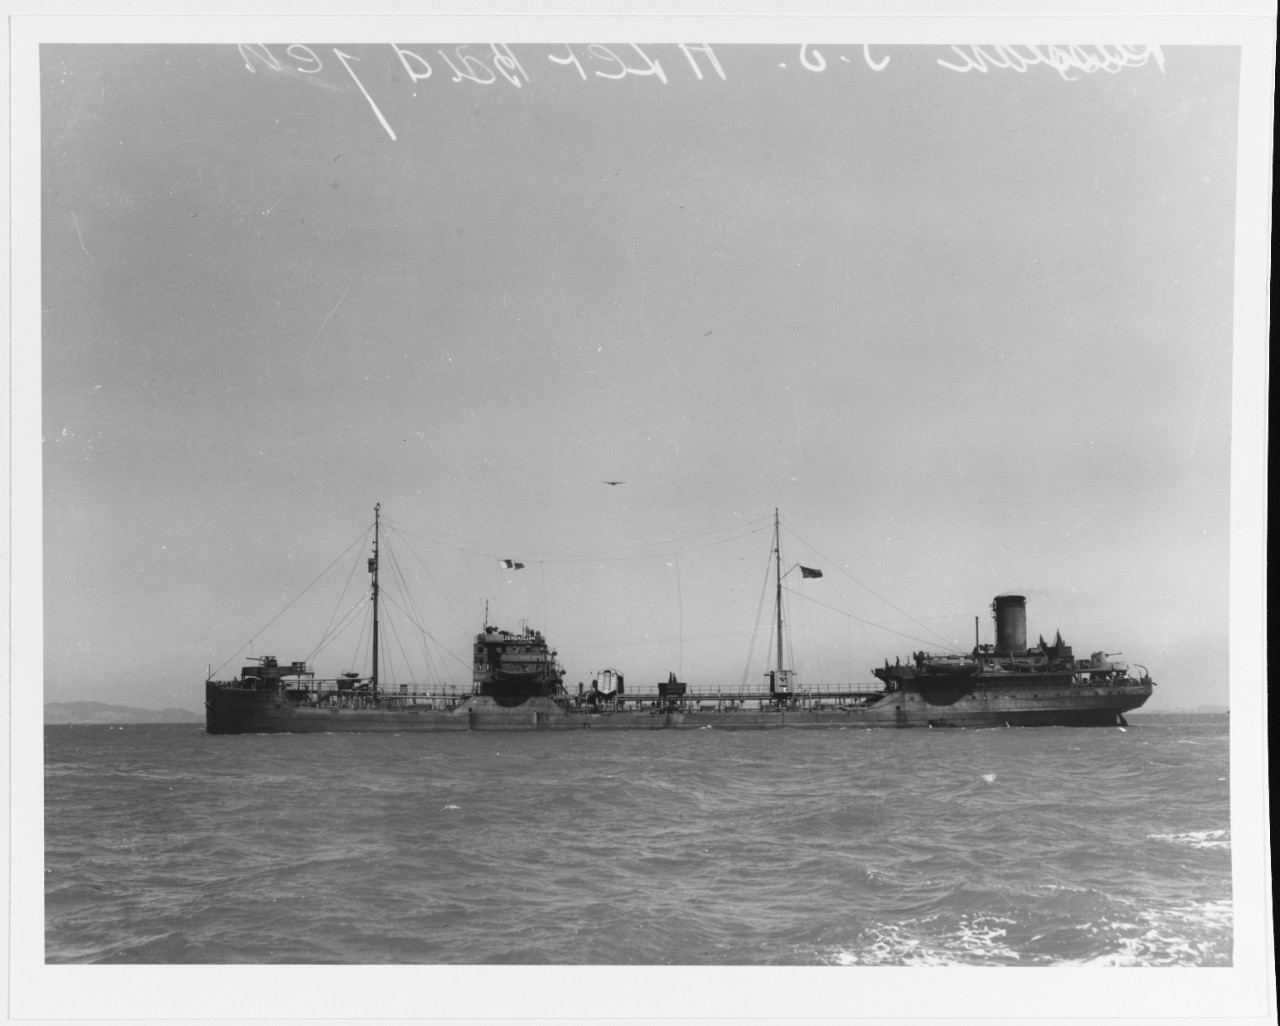 S.S. AZERBAIDJAN (U.S.S.R. Merchant Tanker, 1932-1970)